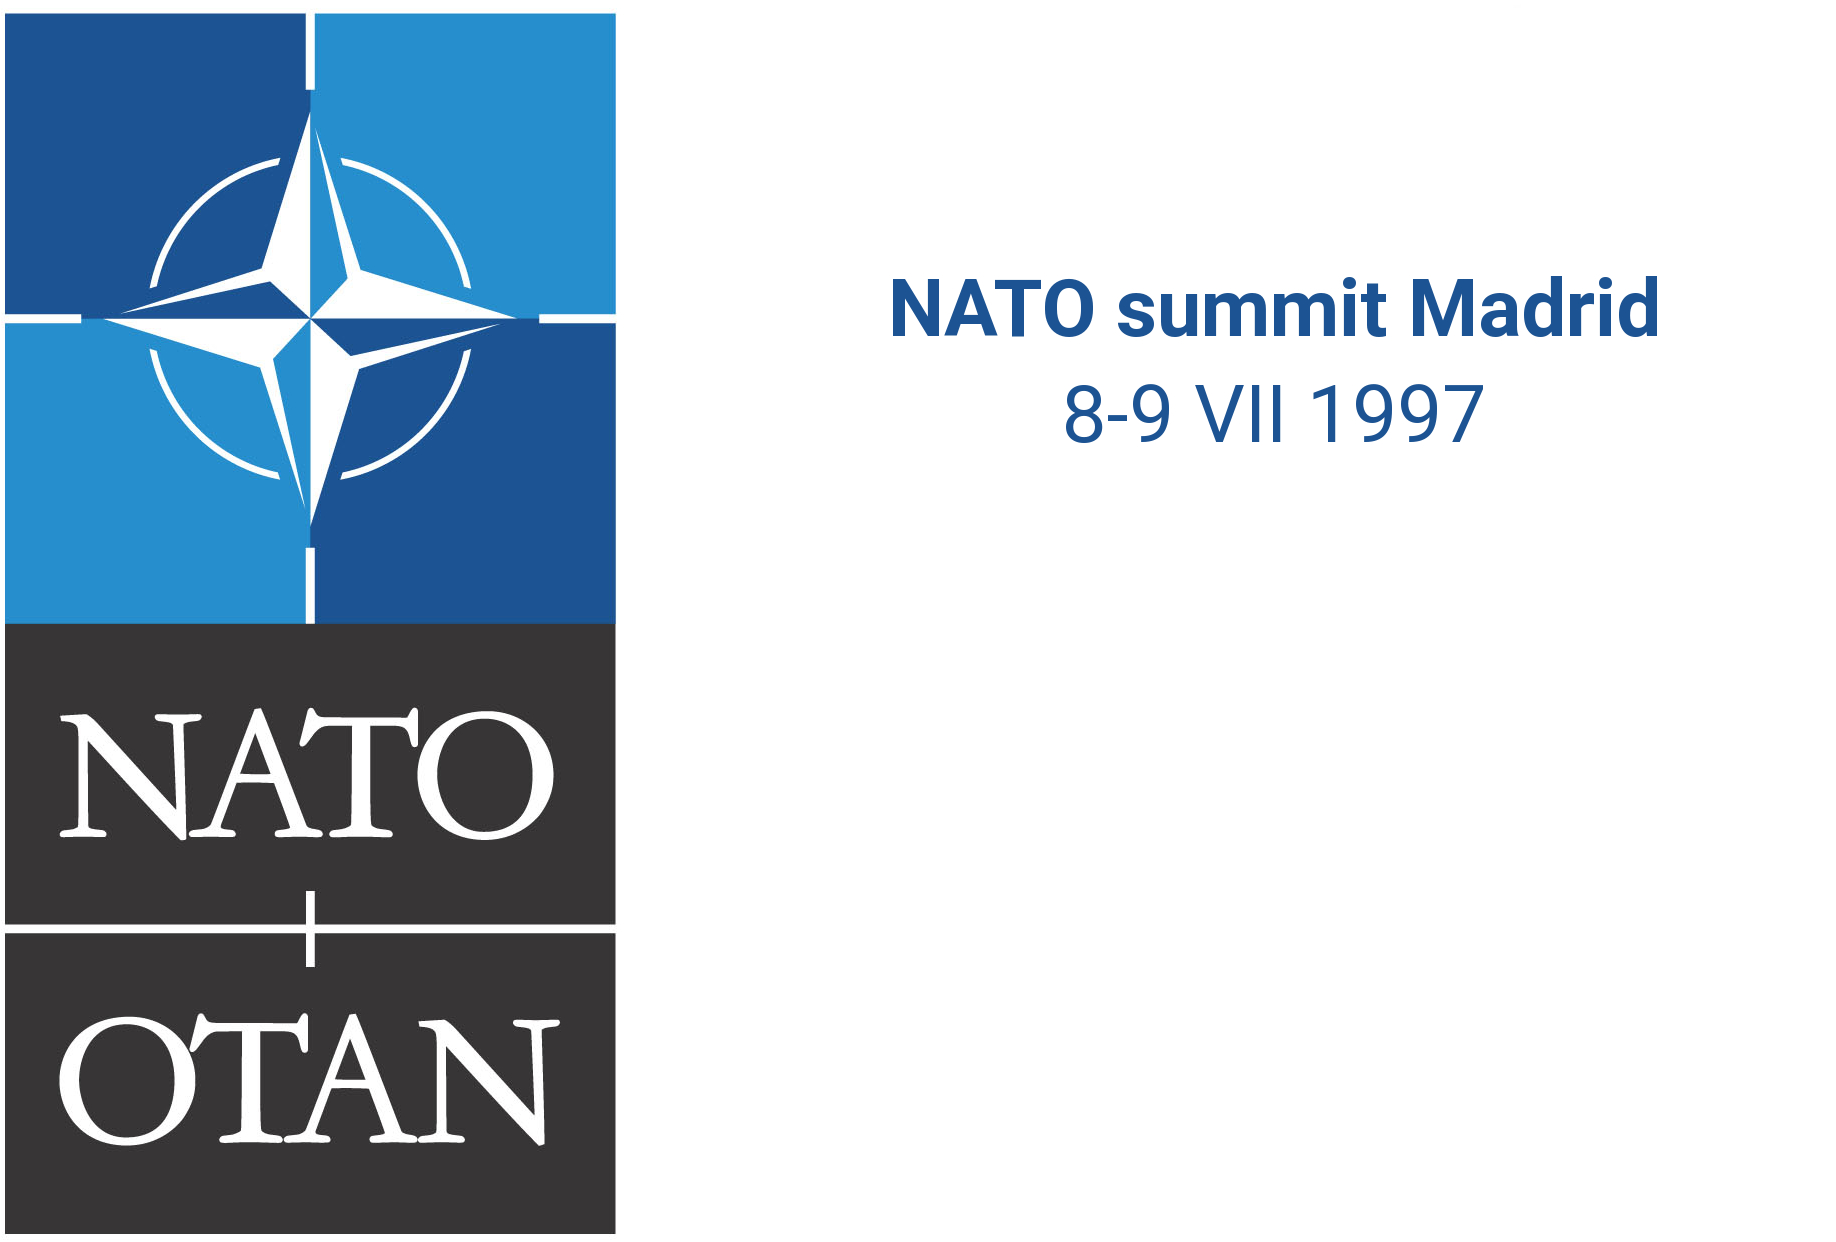 /assets/contentimages/NATO_summit_Madrid.jpg